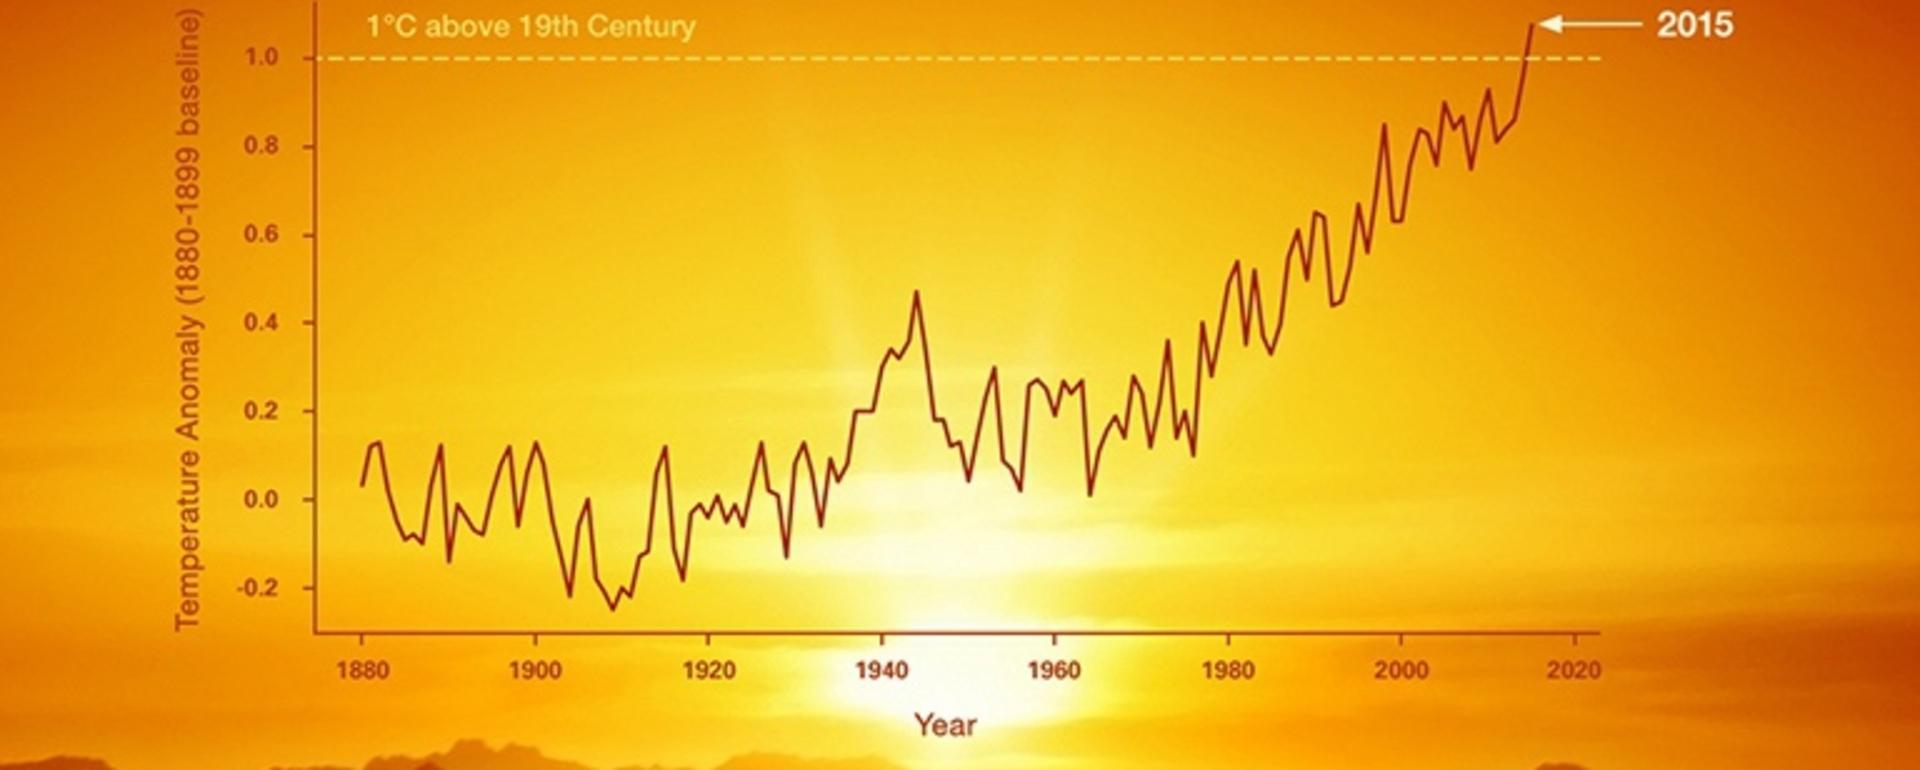 NASA climate data